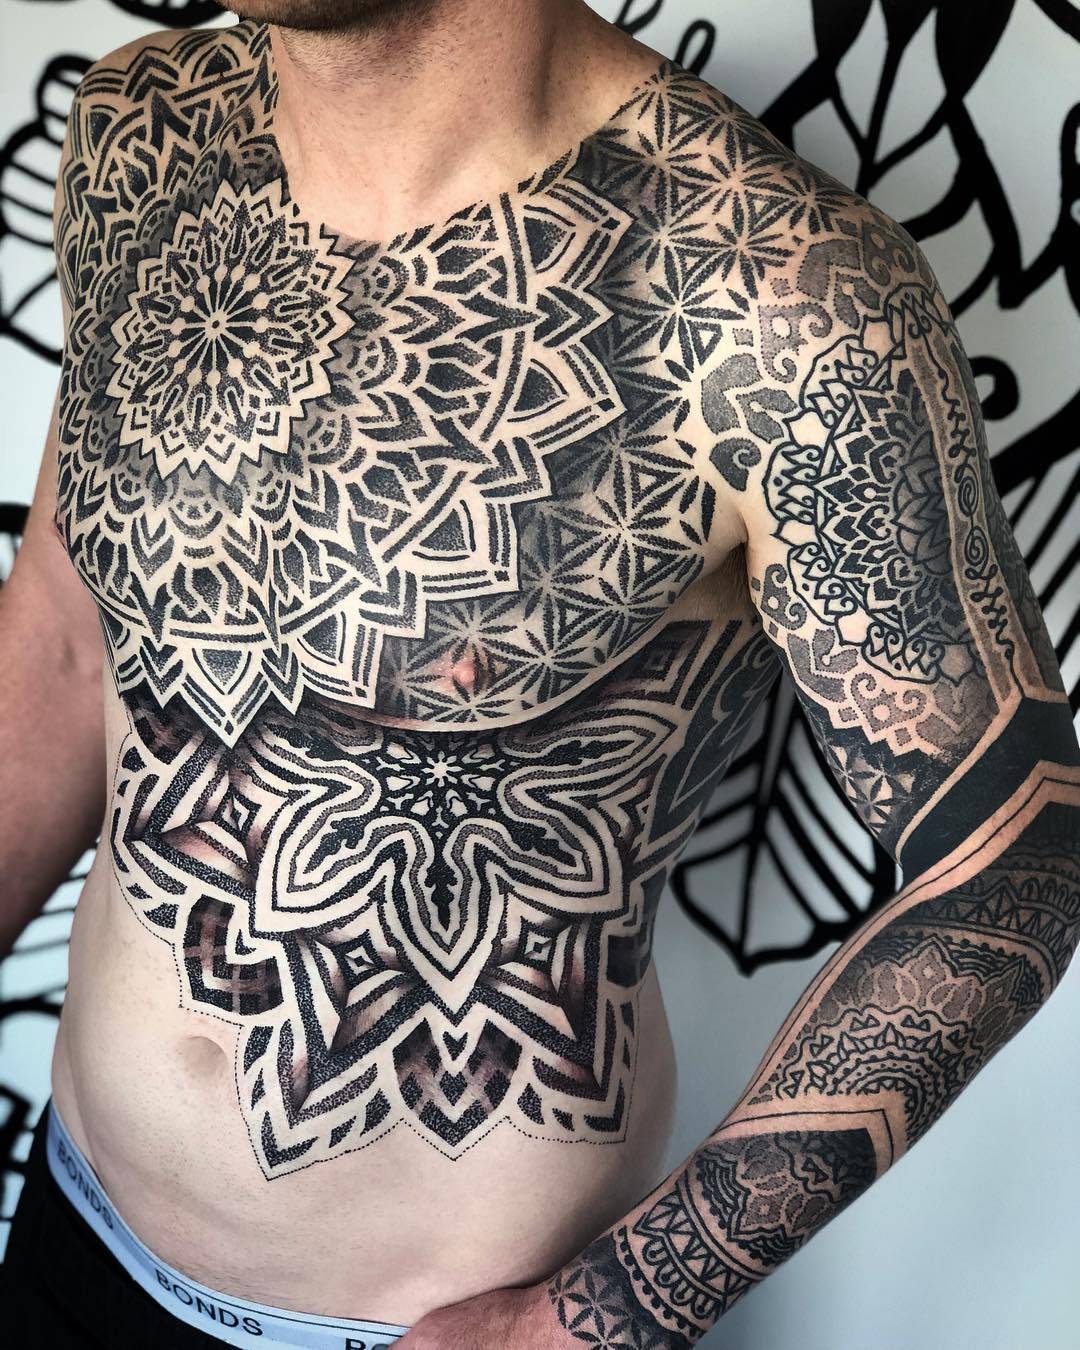 KeeganSweeney Tattooer  Chest tattoos for women, Tattoed girls